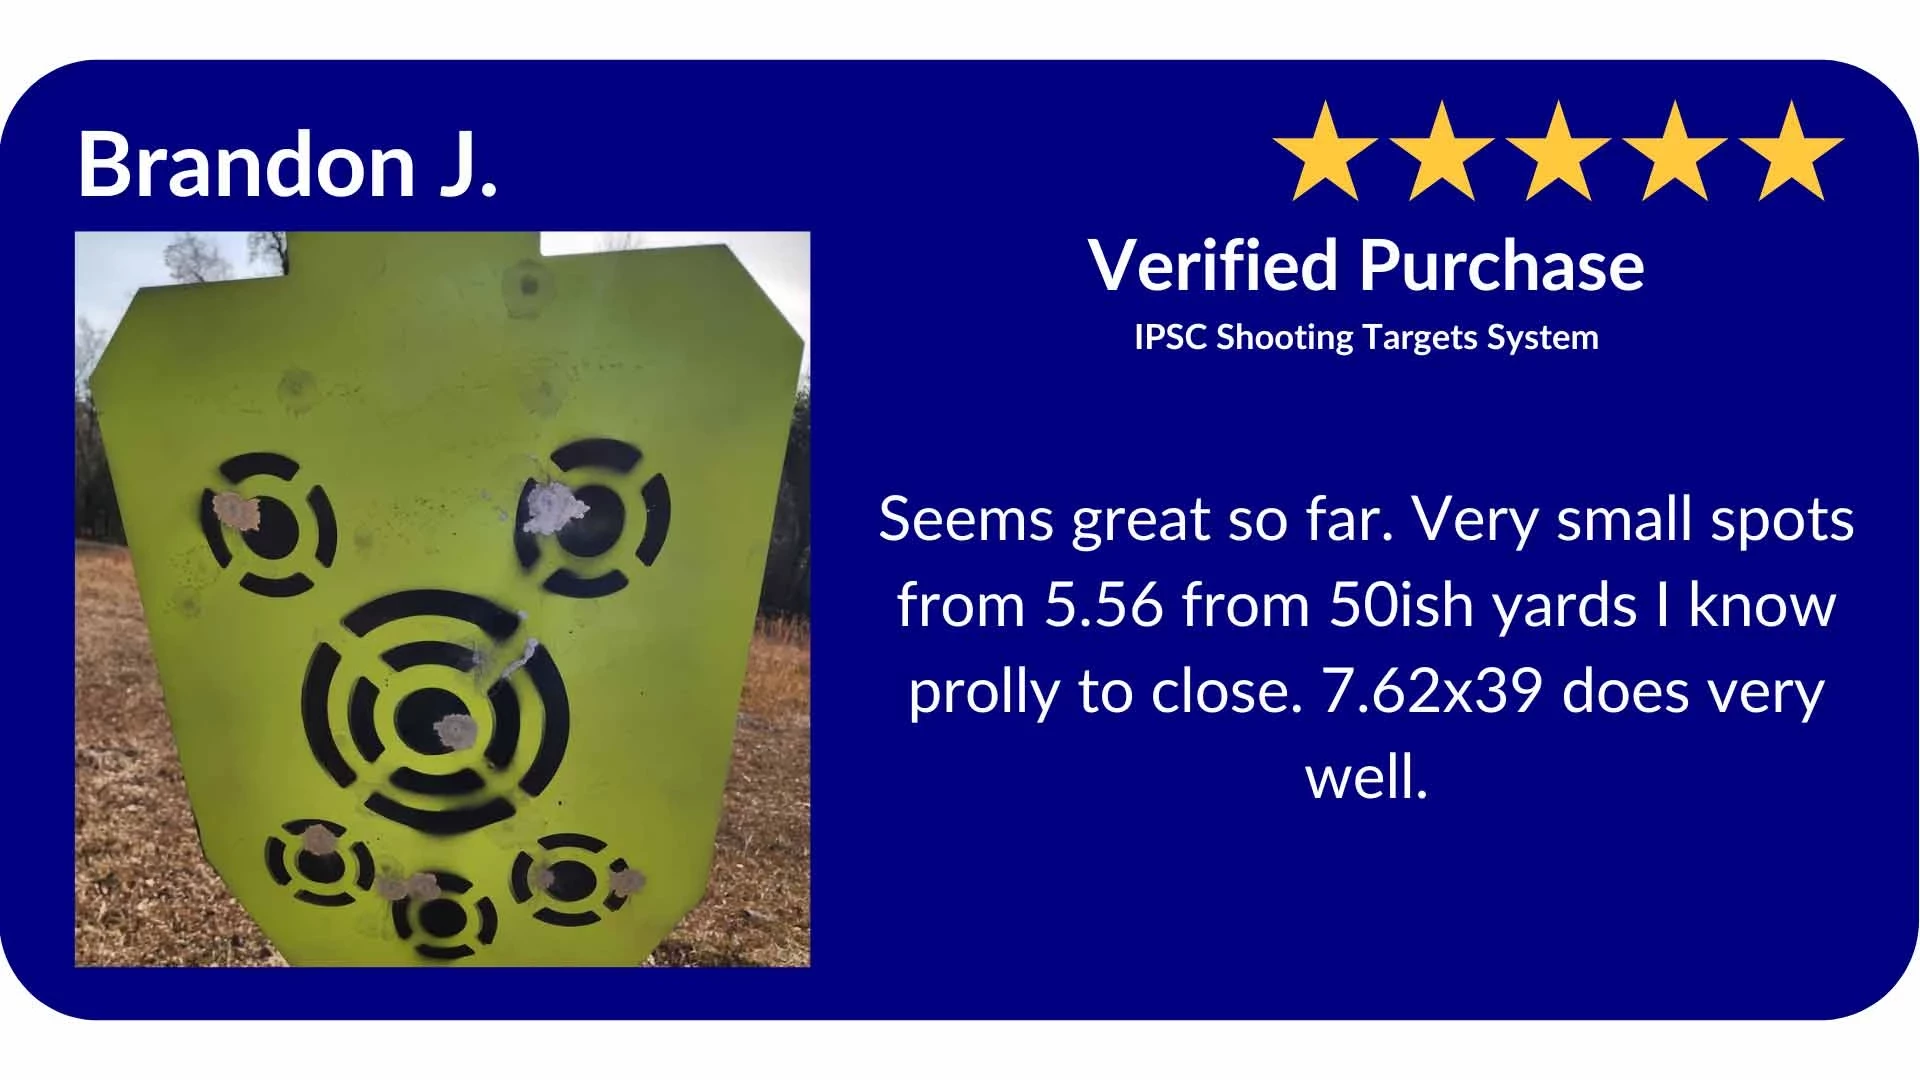 IPSC shooting targets